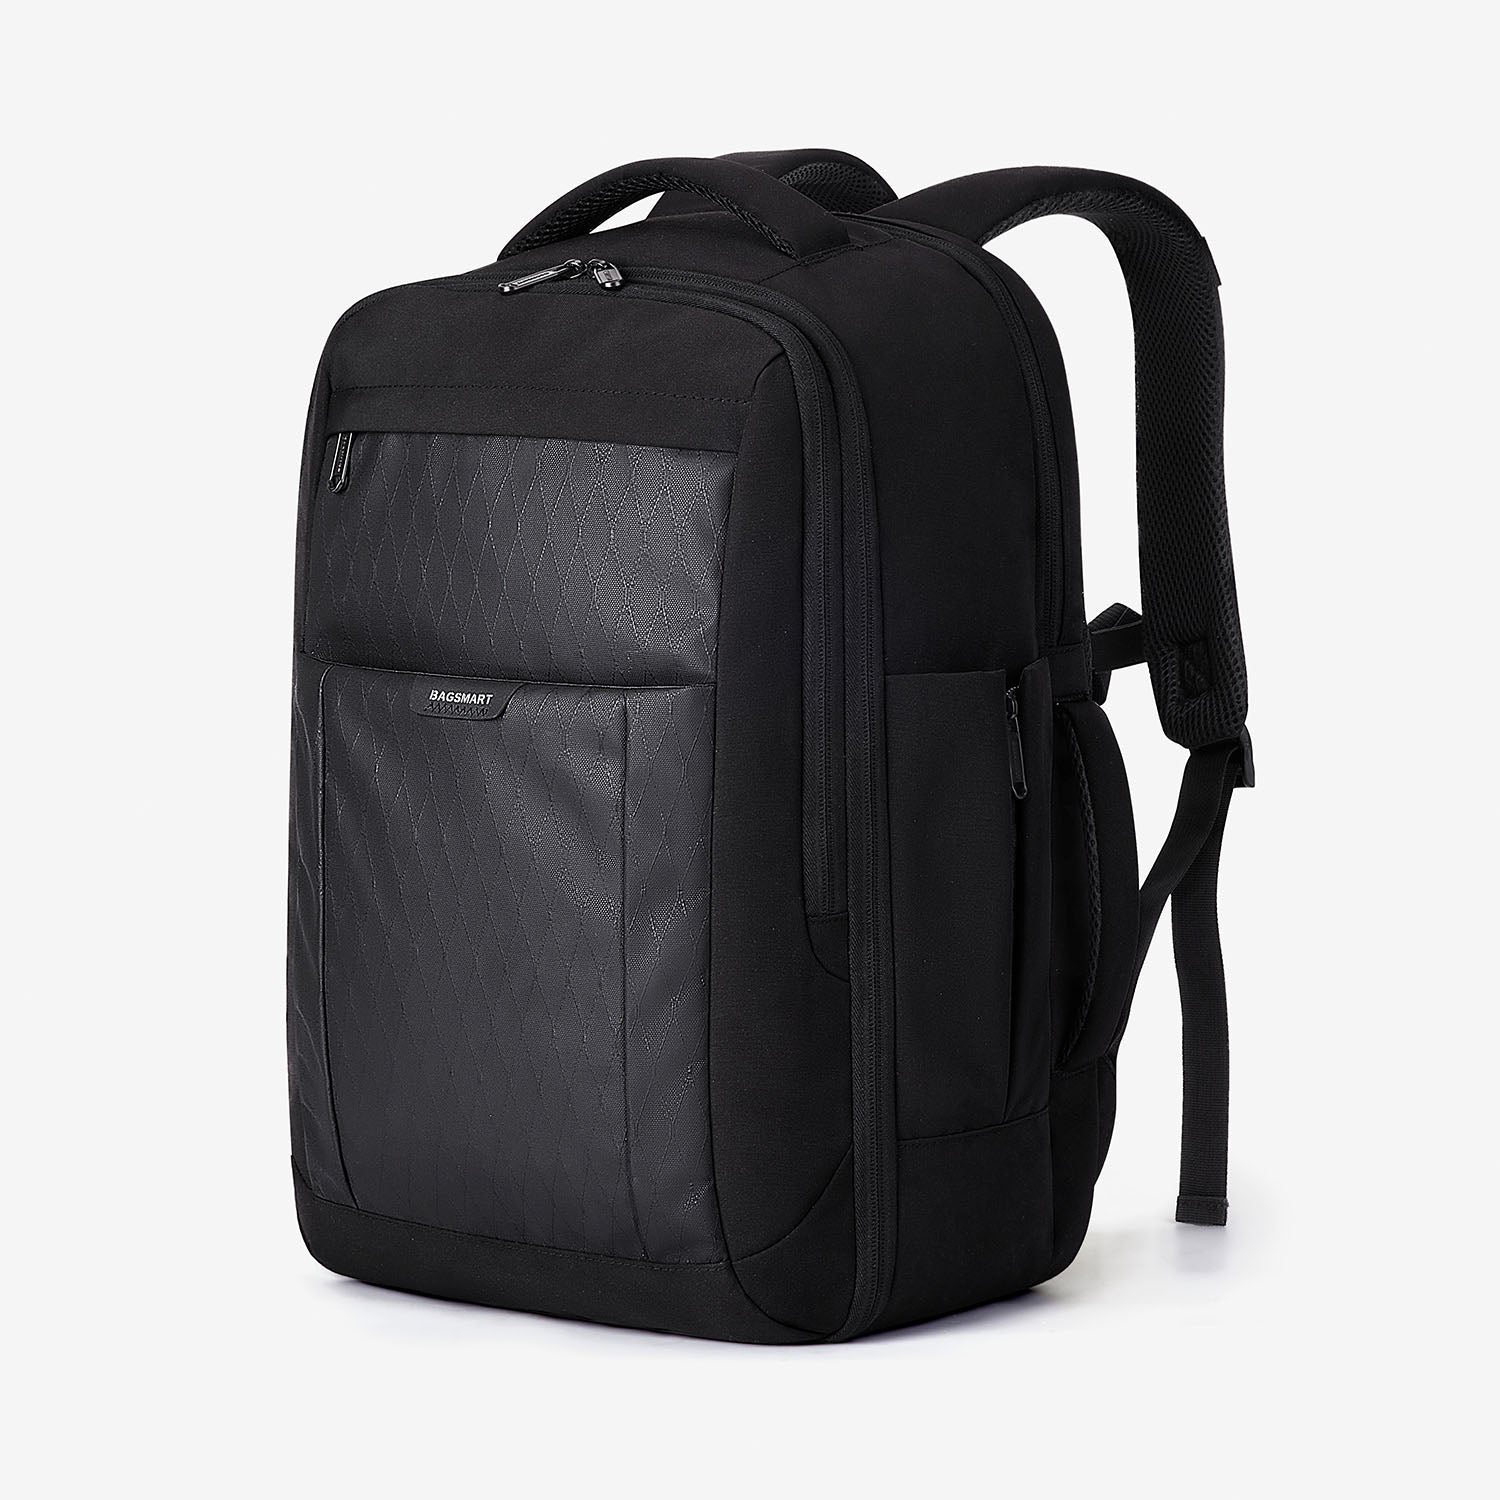  BAGSMART Laptop Bag for Women, 15.6 Inch Computer Bag,Laptop  Carrying Case,Laptop Business Briefcase,Office Bag Travel Work,Black :  Electronics